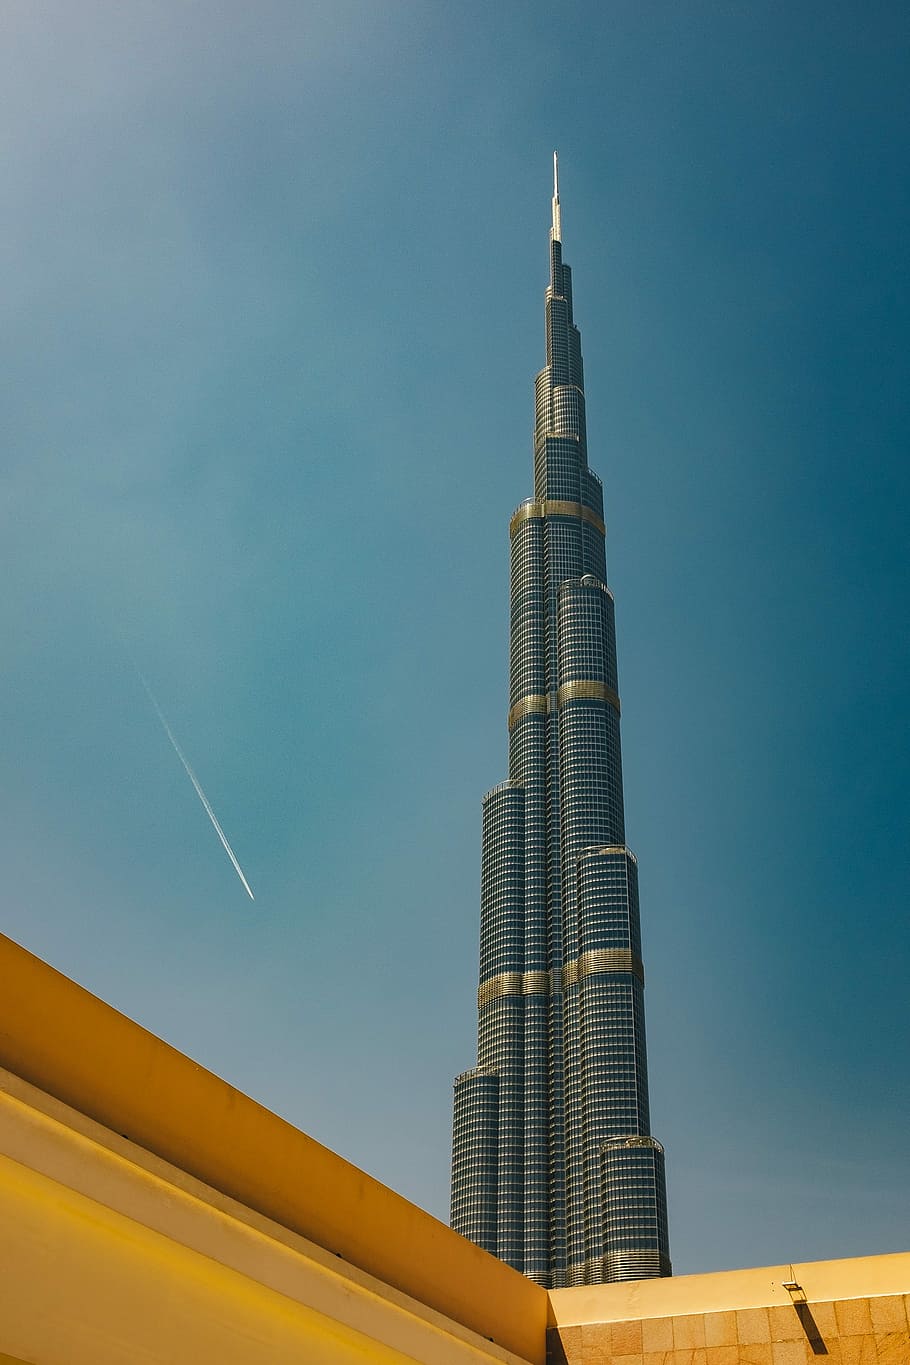 HD wallpaper: Burj Khalifa, Dubai, glass tower building at the city, skyscraper